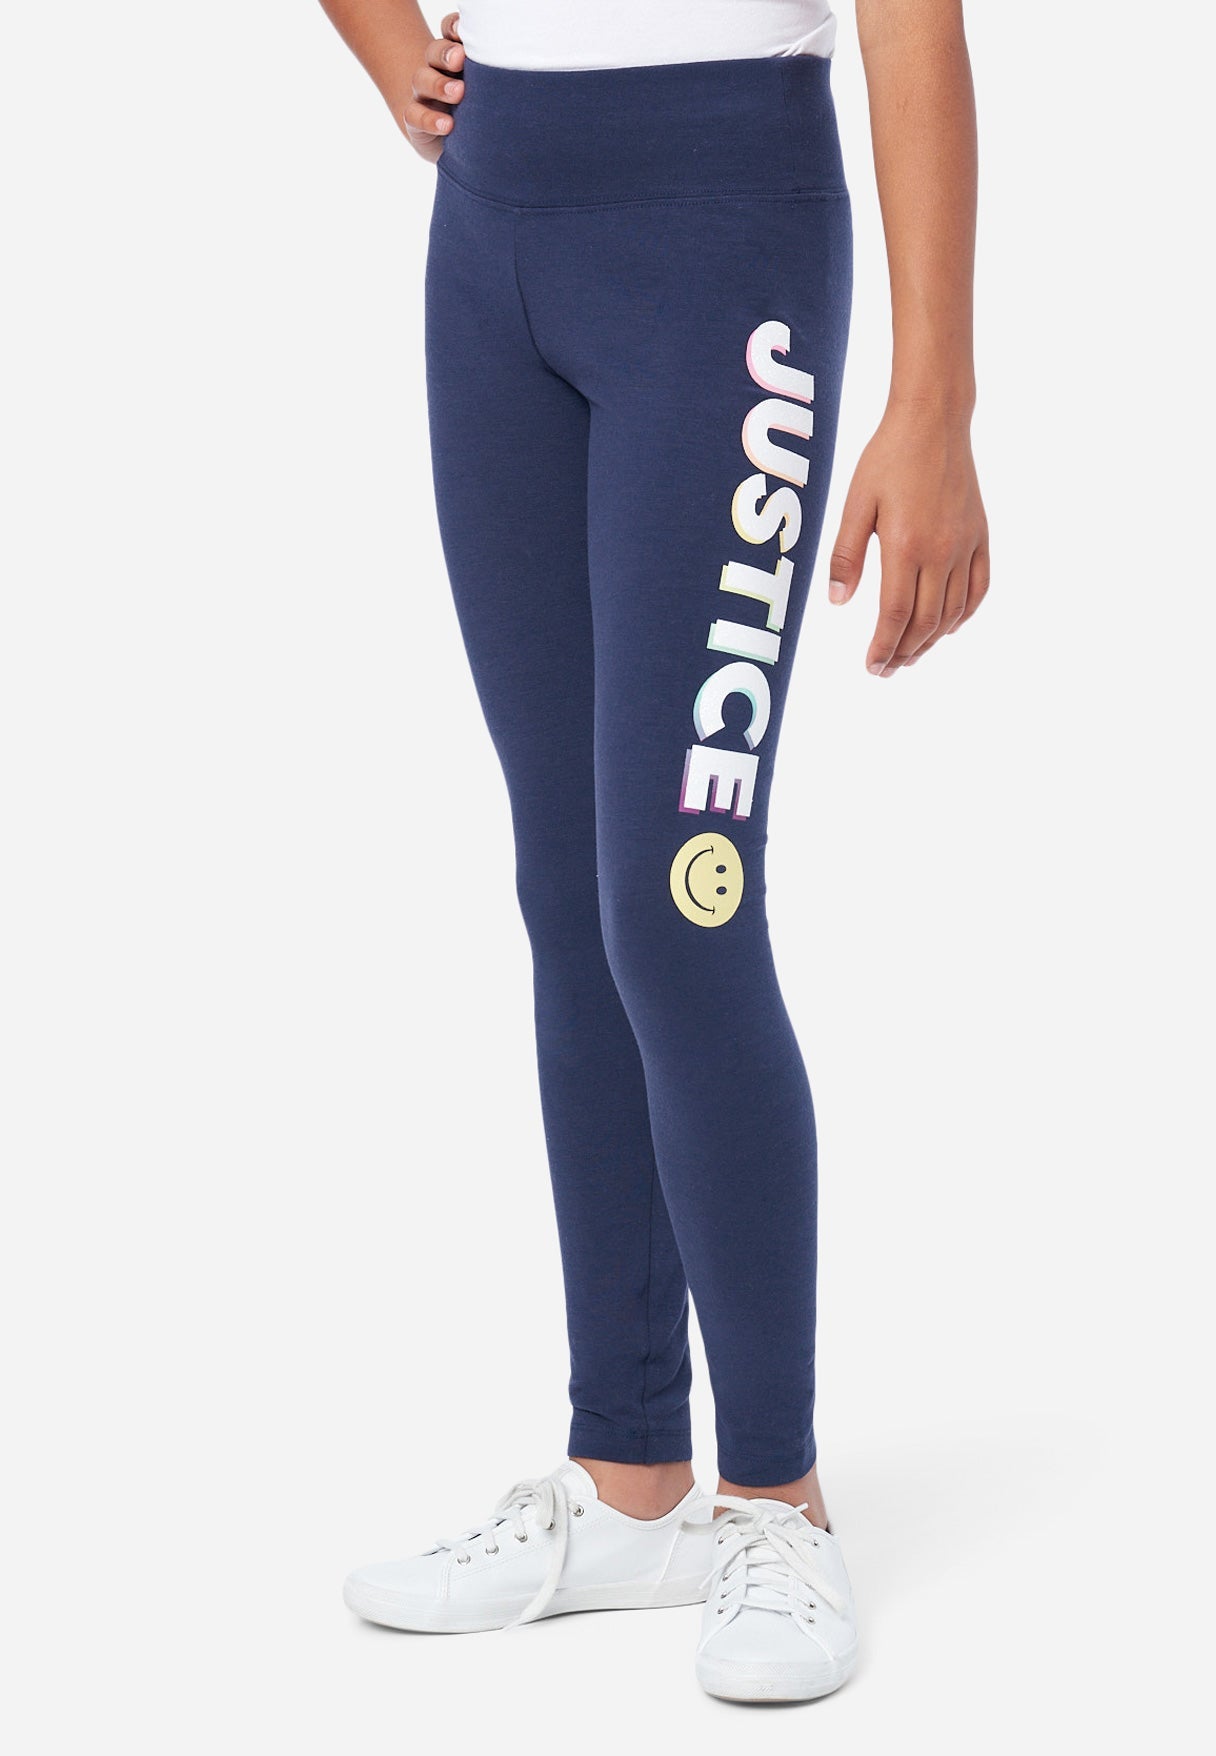 Tesco f&f navy blue ribbed leggings ruffle waist size 10 